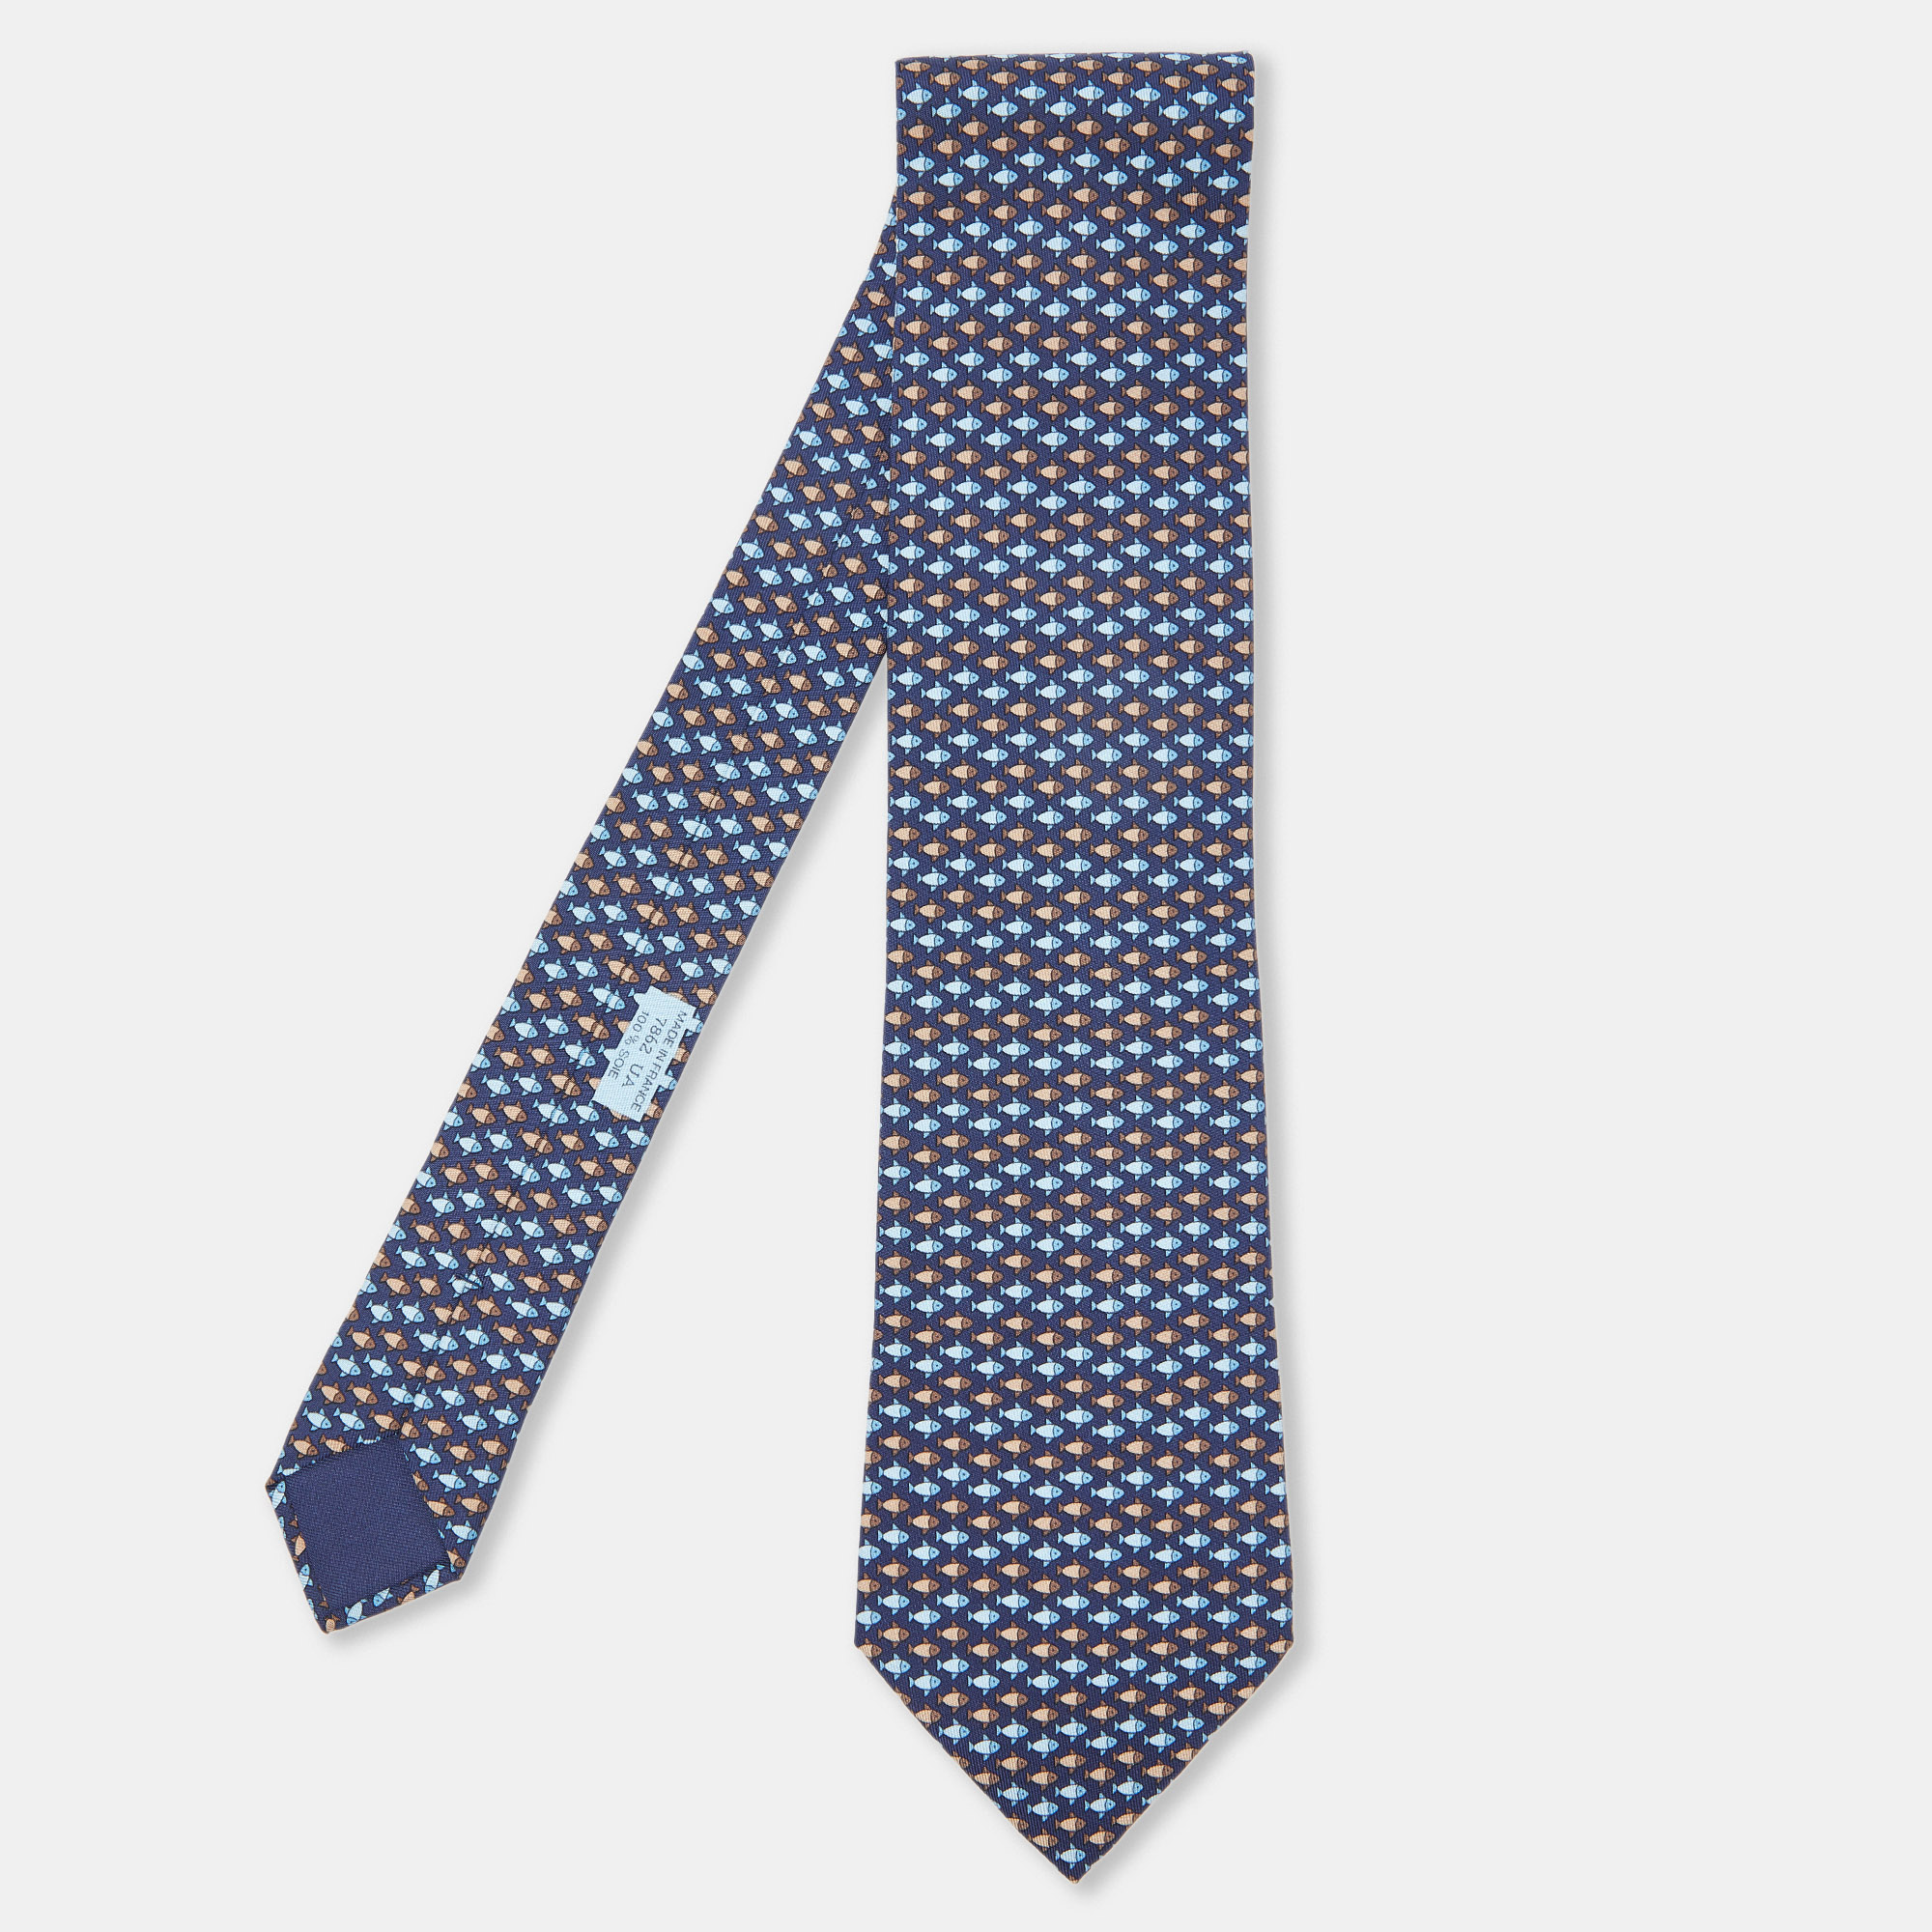 Hermes navy blue fish print silk traditional tie